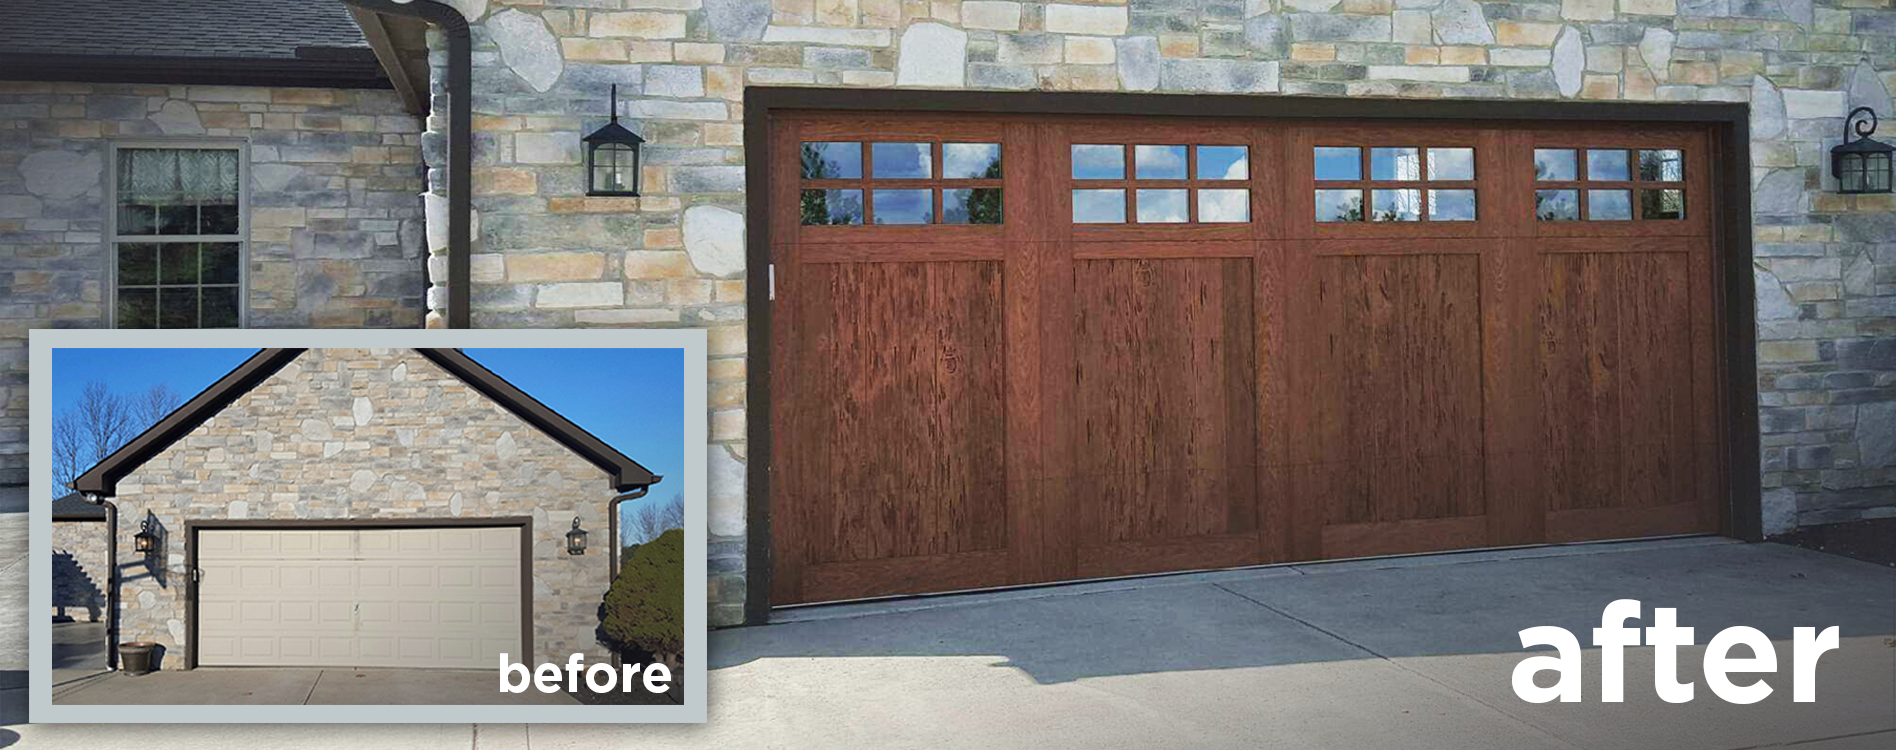 Faux Wood Garage Doors That Look Realistic New Garage Doors pertaining to measurements 1896 X 750